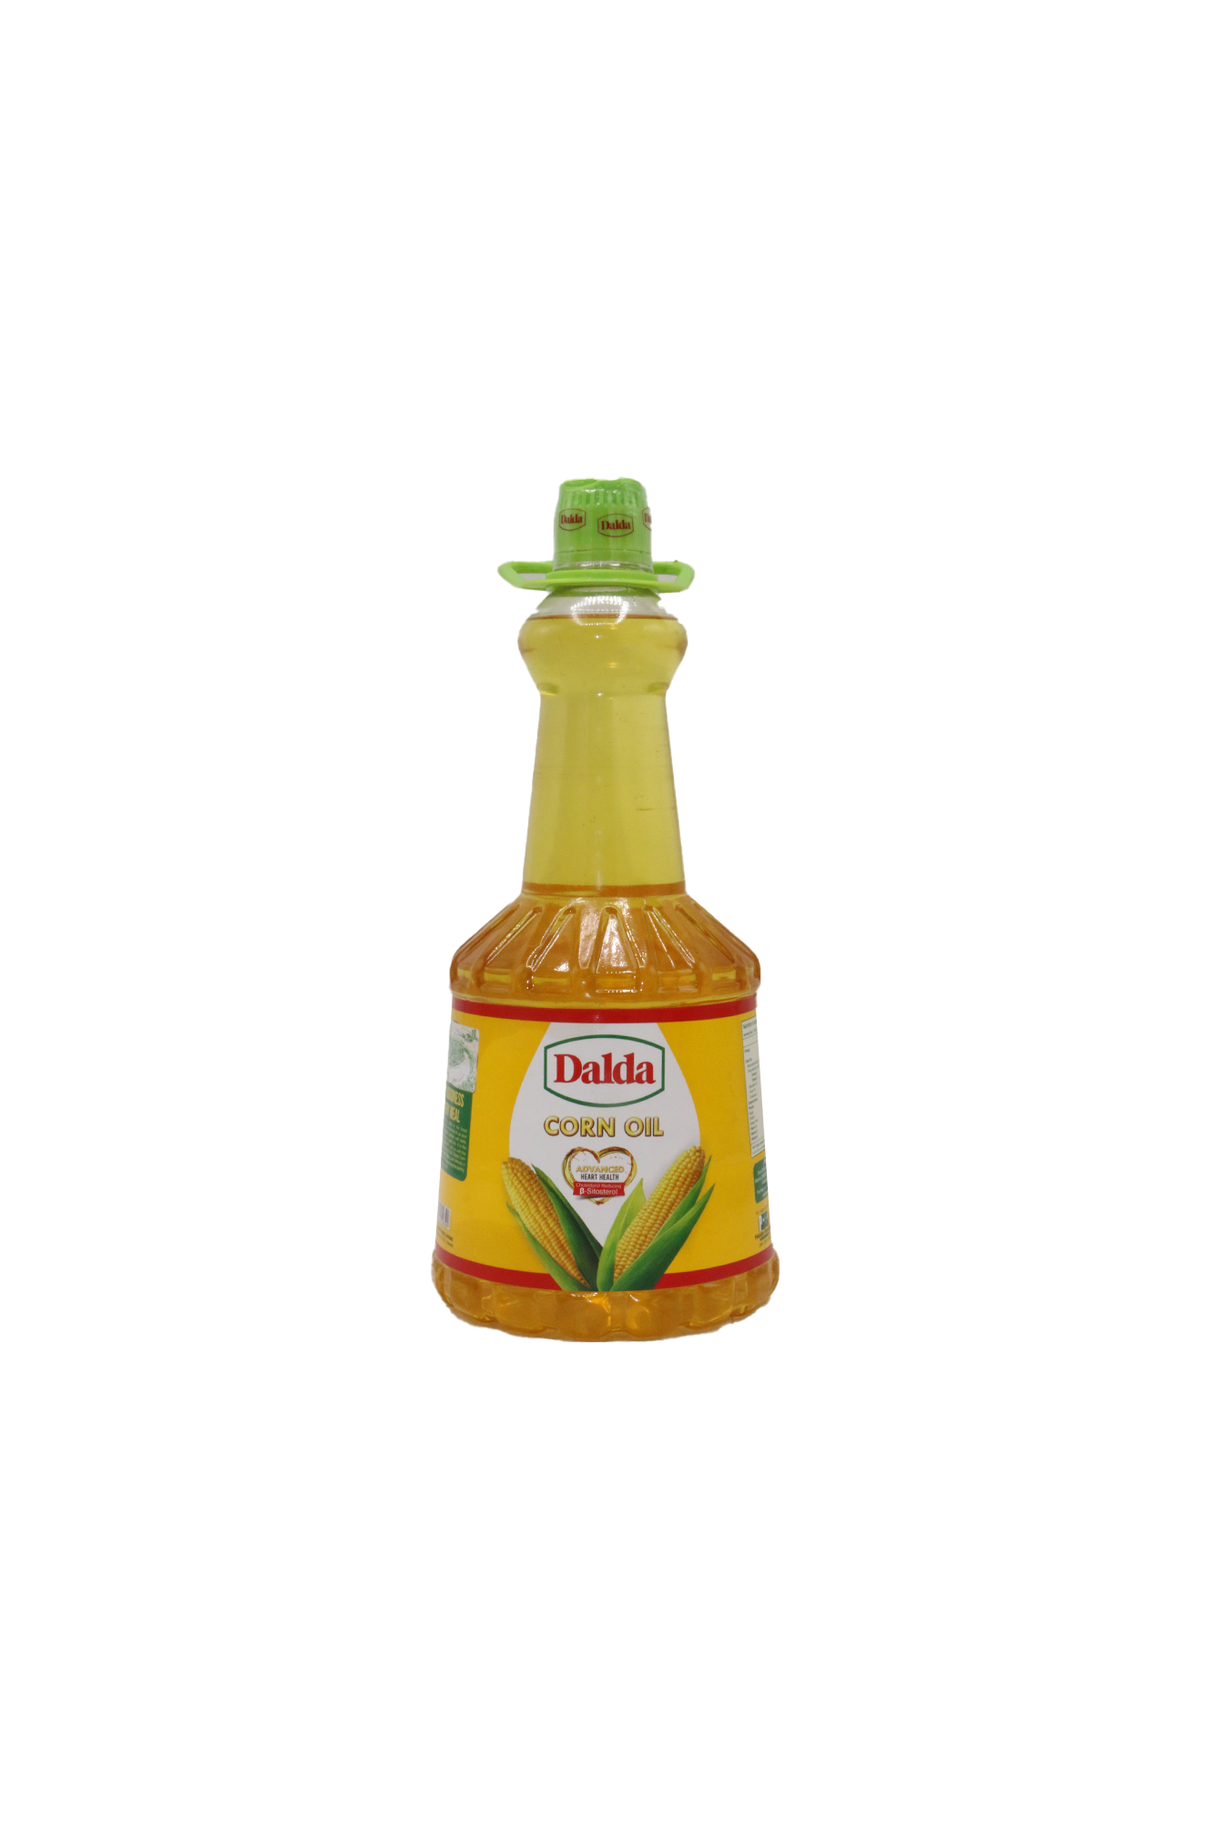 dalda corn oil 3l bottle